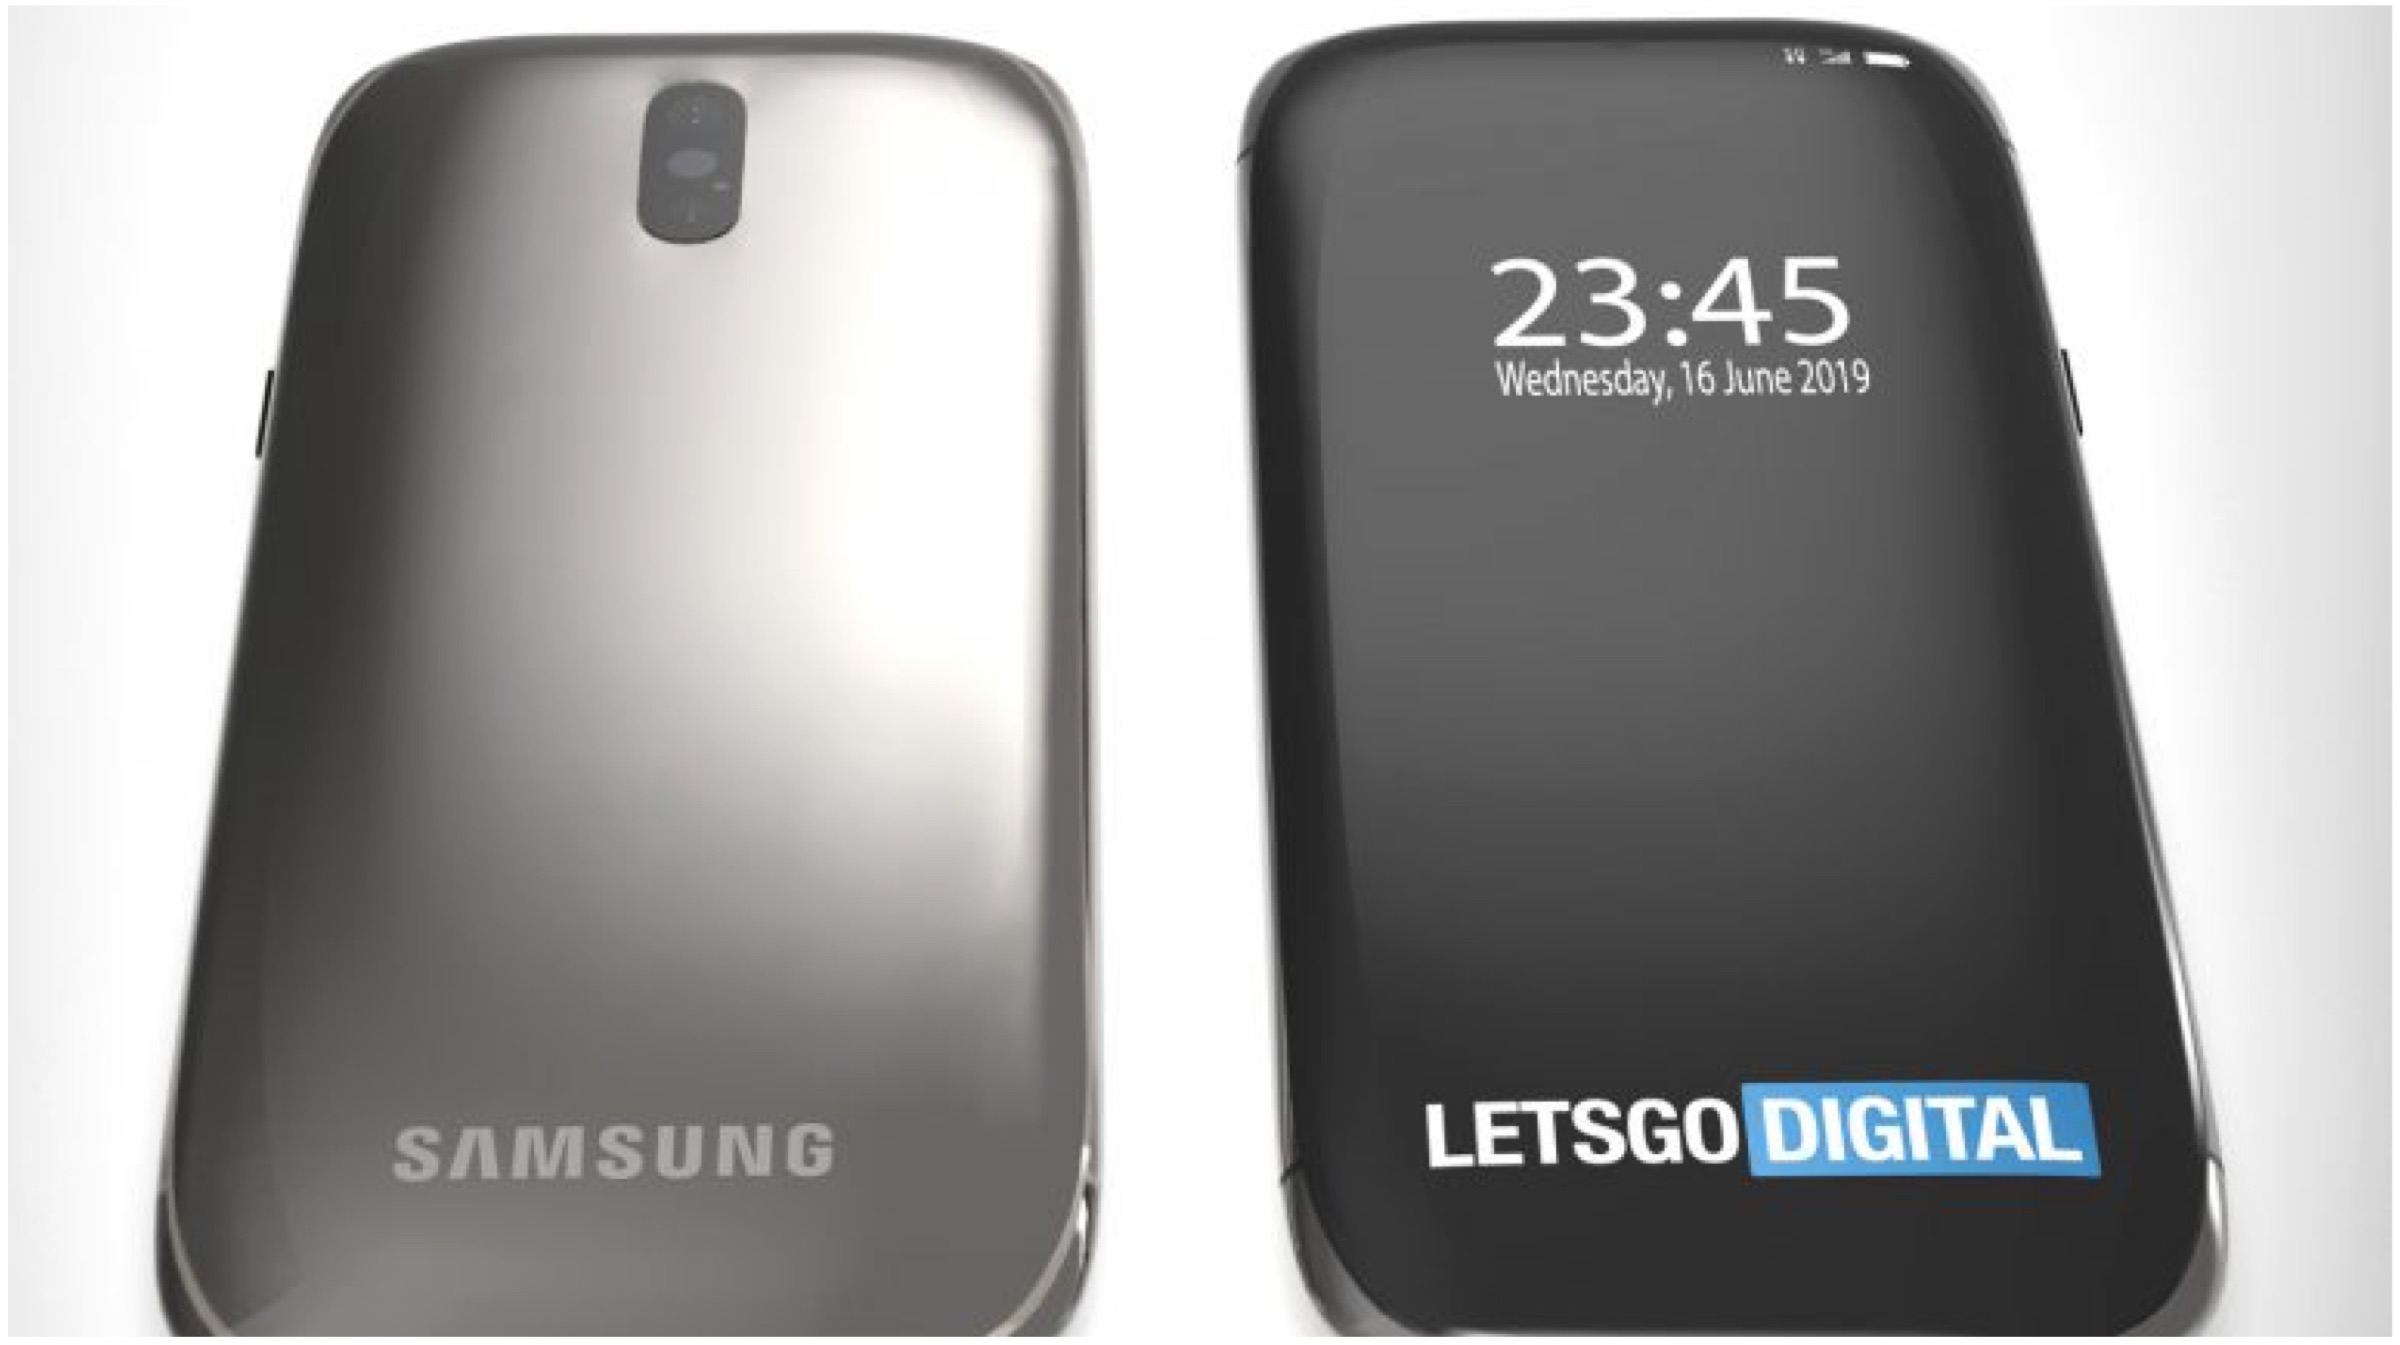 Samsung curved smartphone